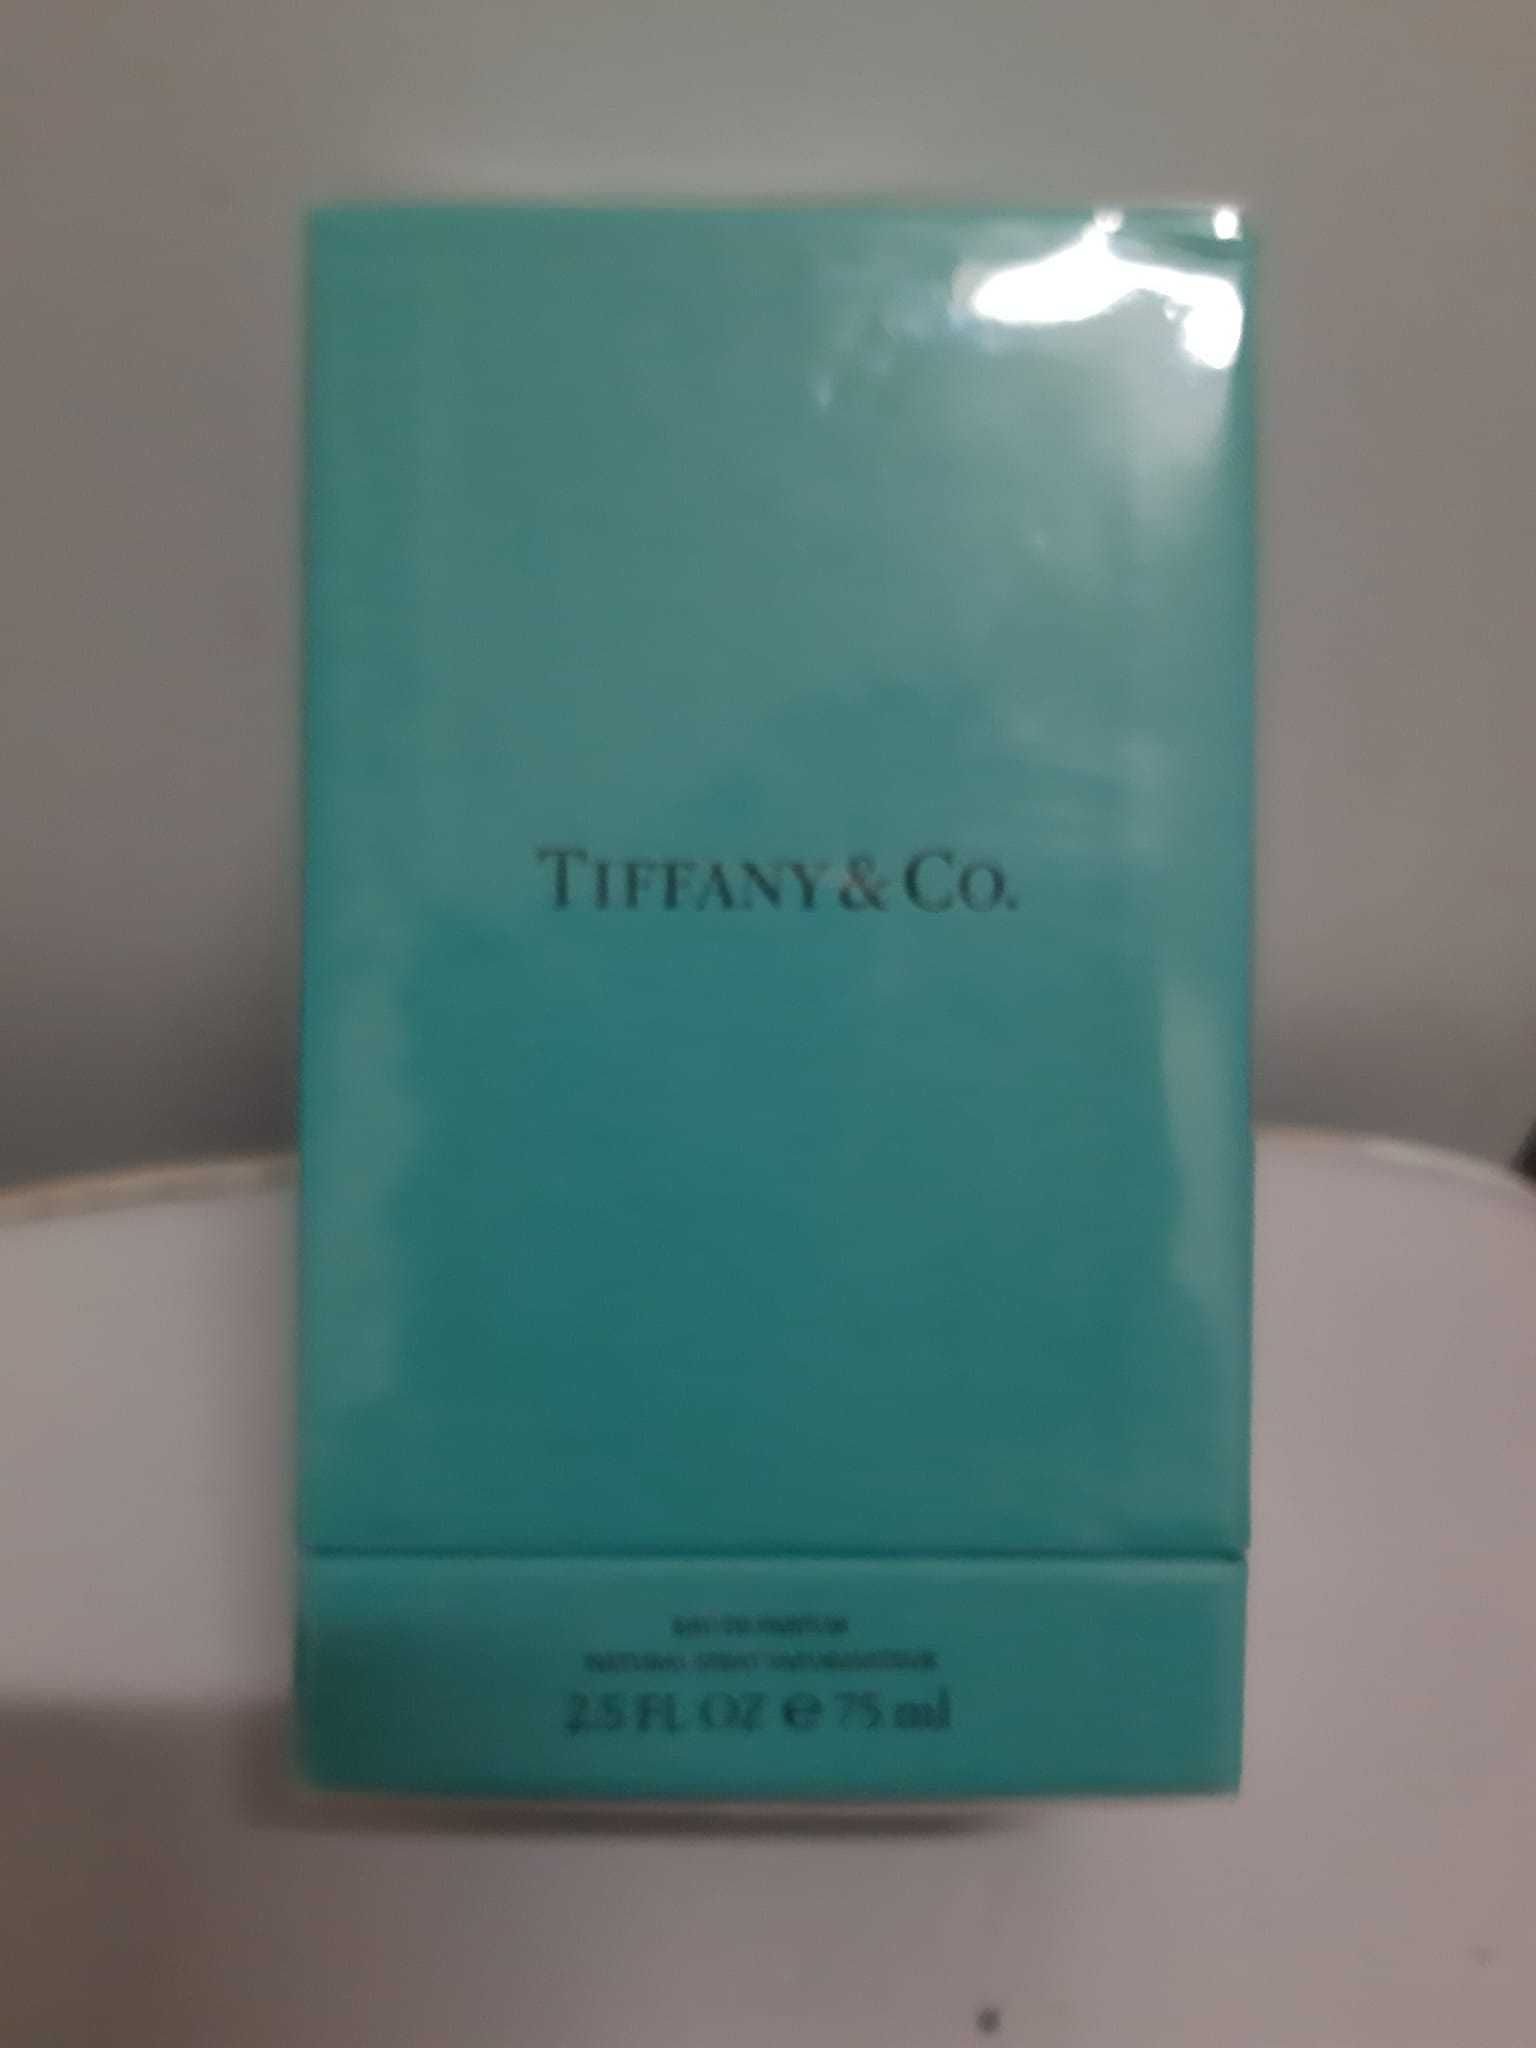 Perfumes Escada Cherry in Japan 100 ml edt /Tiffany&Co 75 ml edp